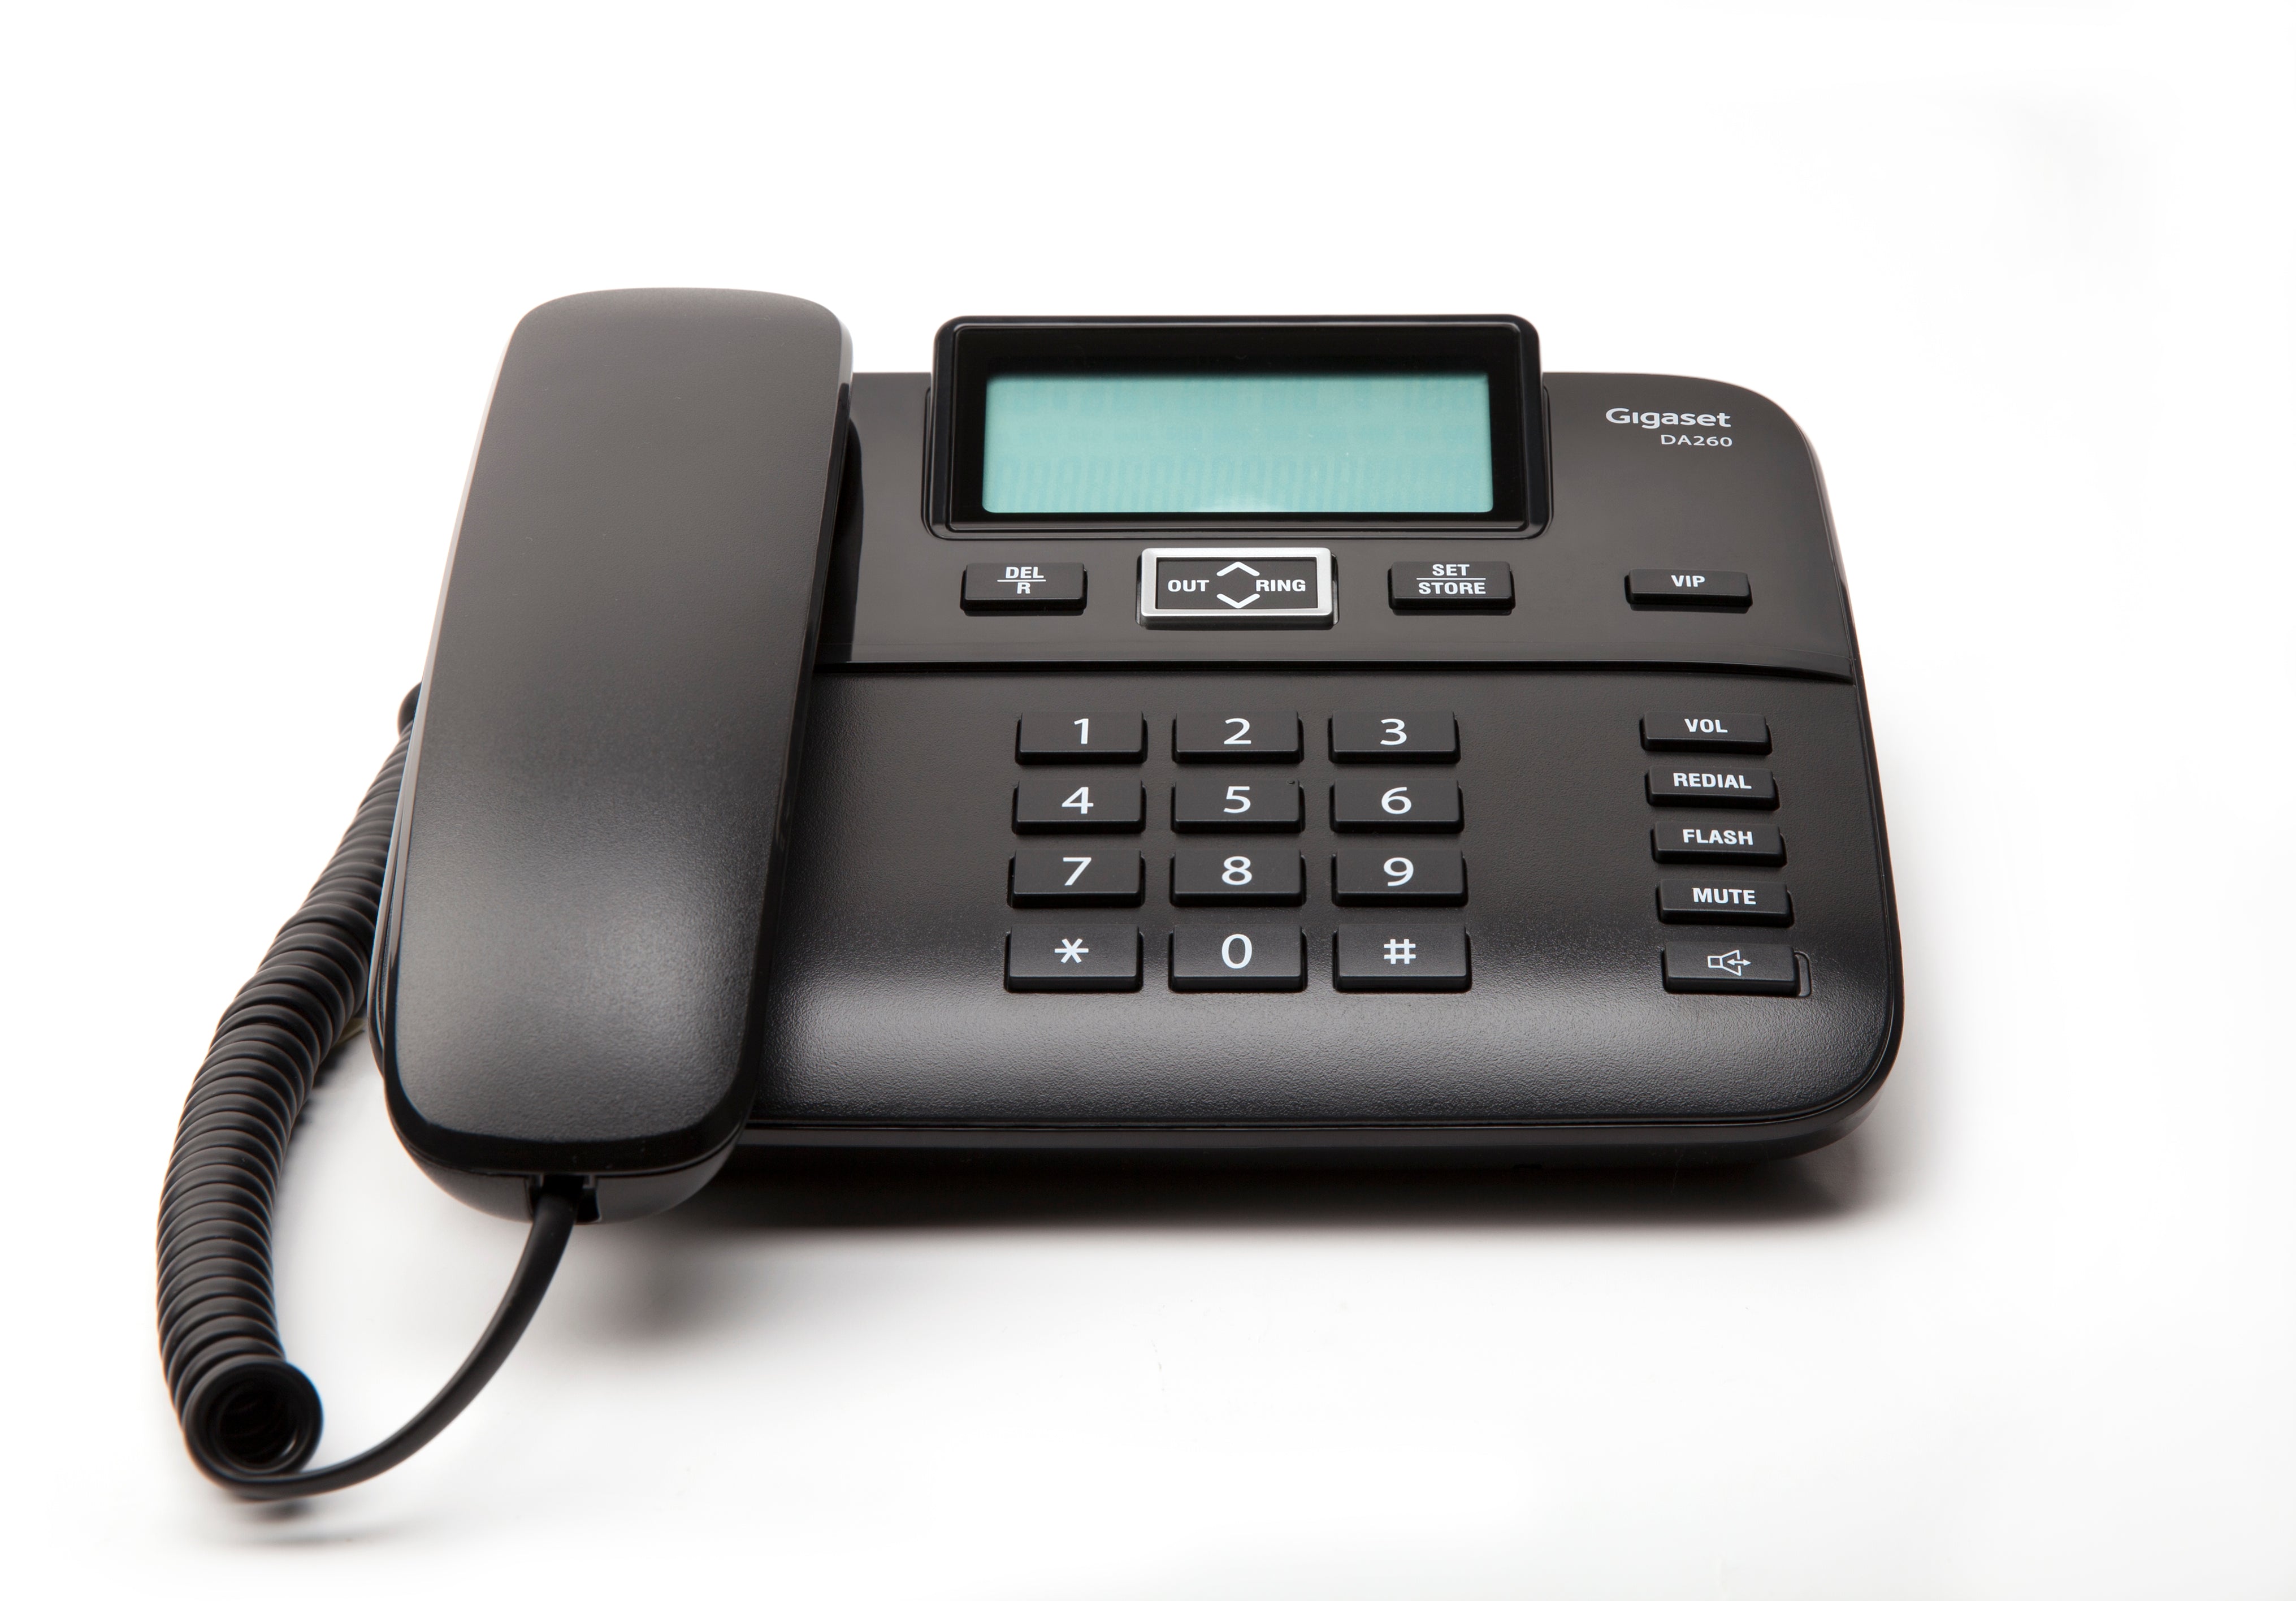 Cordless phone Gigaset A116. Wireless Handset Home/office Landline  Telephone.